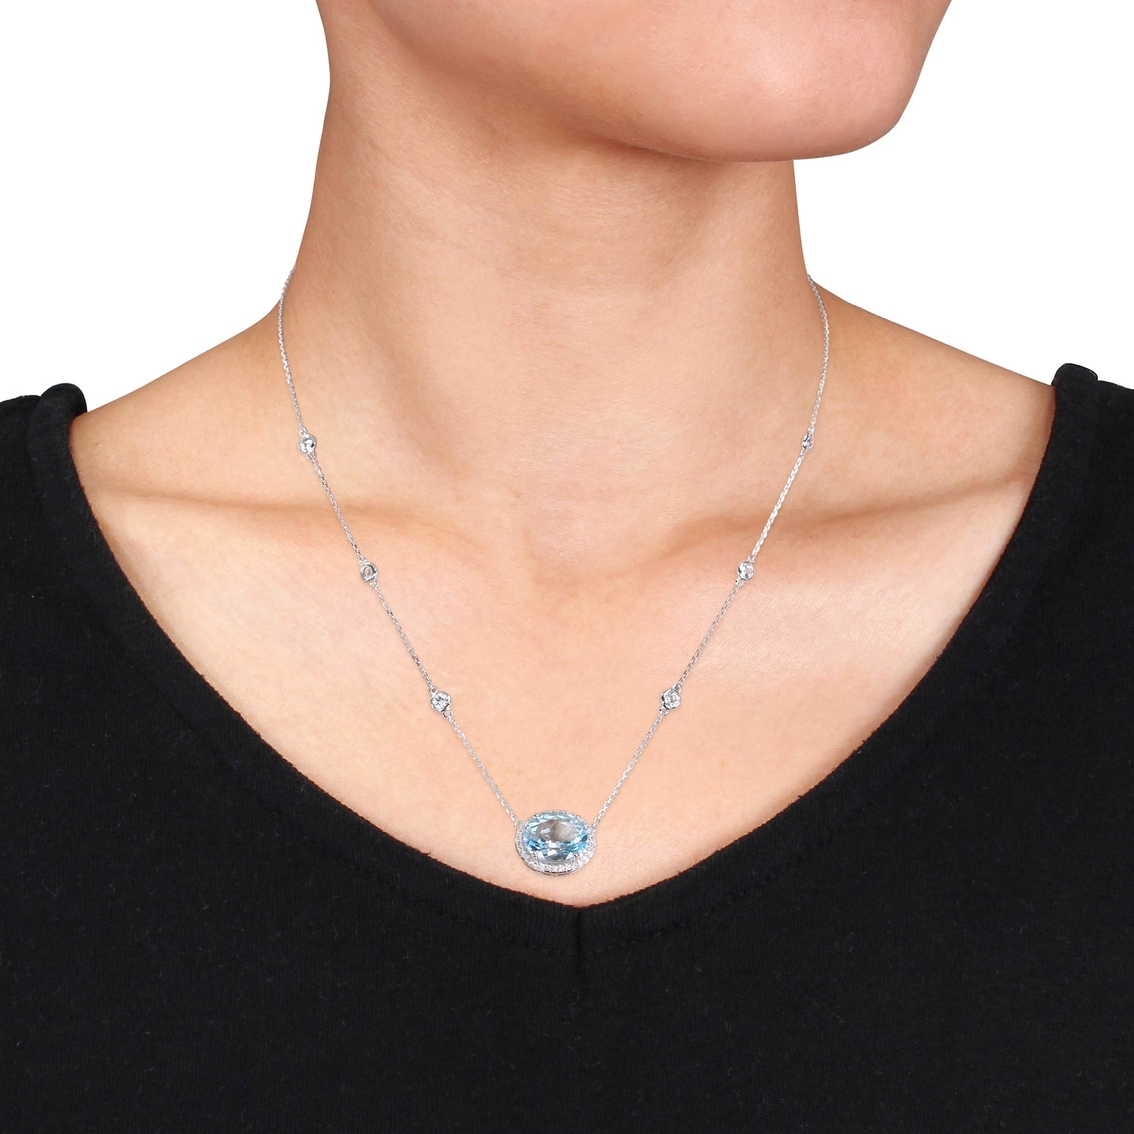 Sofia B. 14K White Gold 1/6 CTW Diamond, Blue Topaz and White Sapphire Necklace - Image 2 of 2